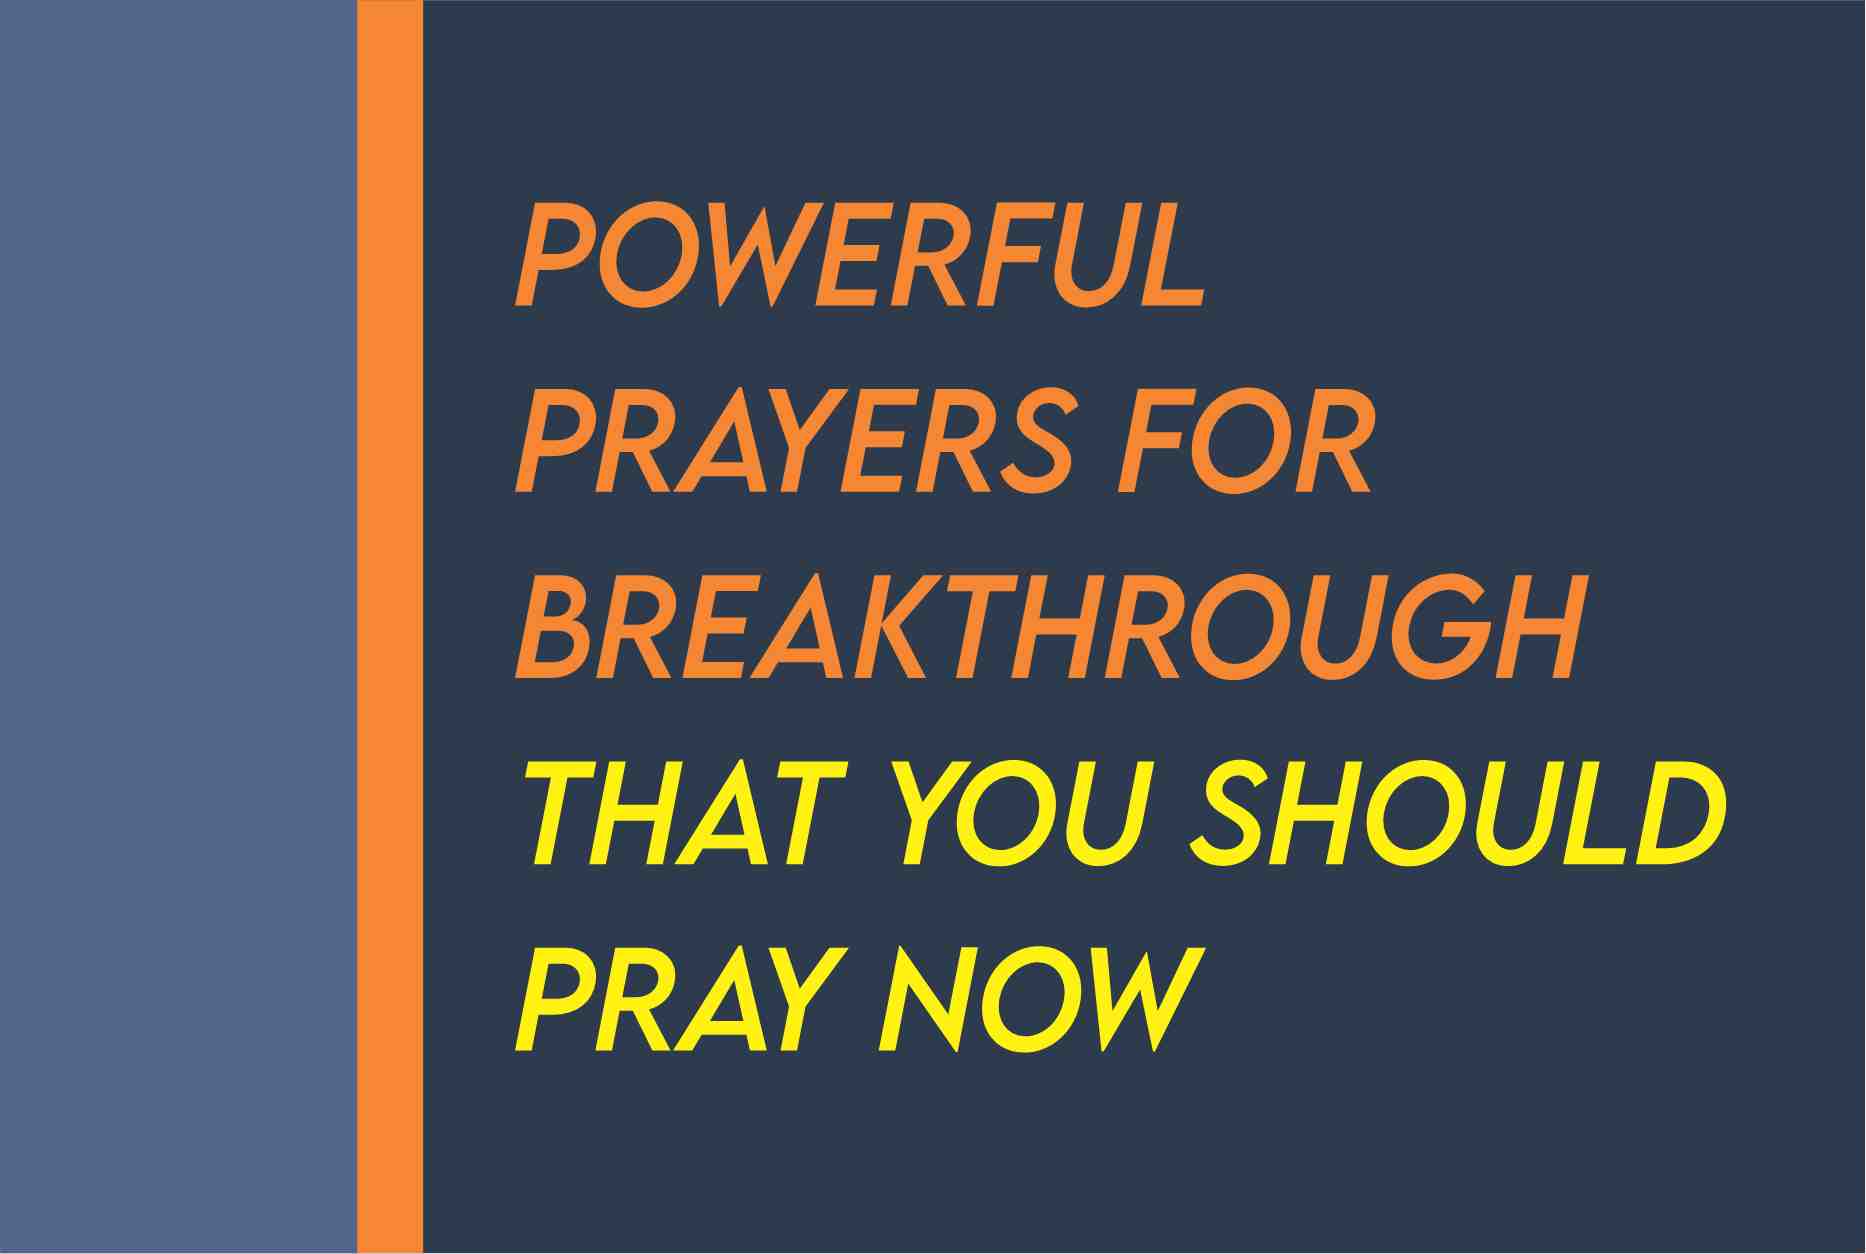 Breakthrough Prayer Points With Scriptures